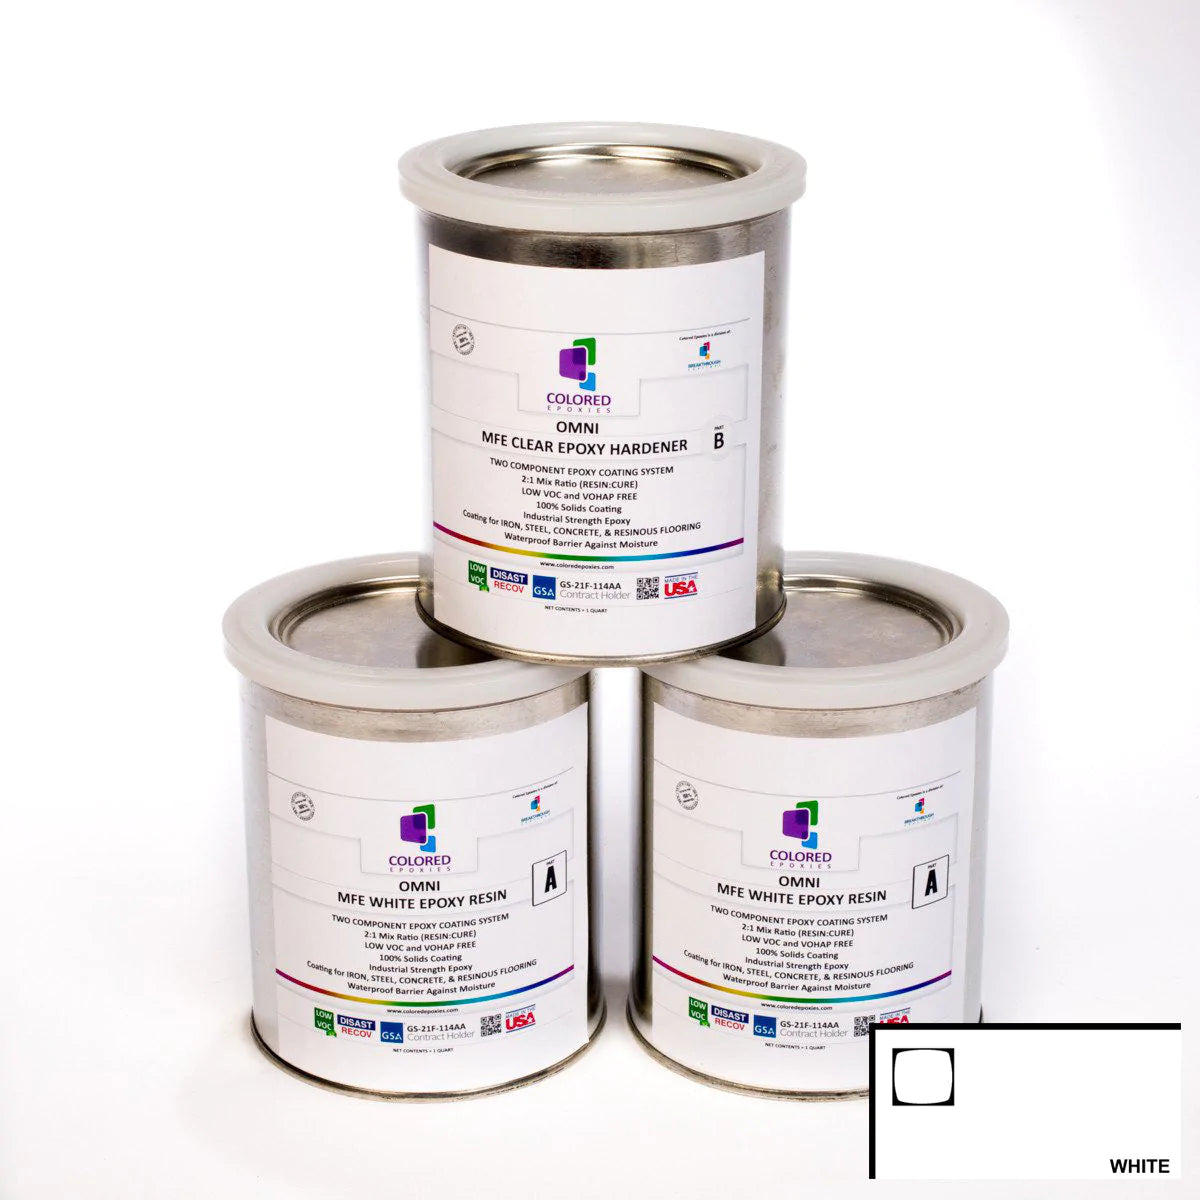 Coating Epoxy Resin - High viscosity, heat resistant epoxy resin 600ml –  Just4youonlineUK Ltd